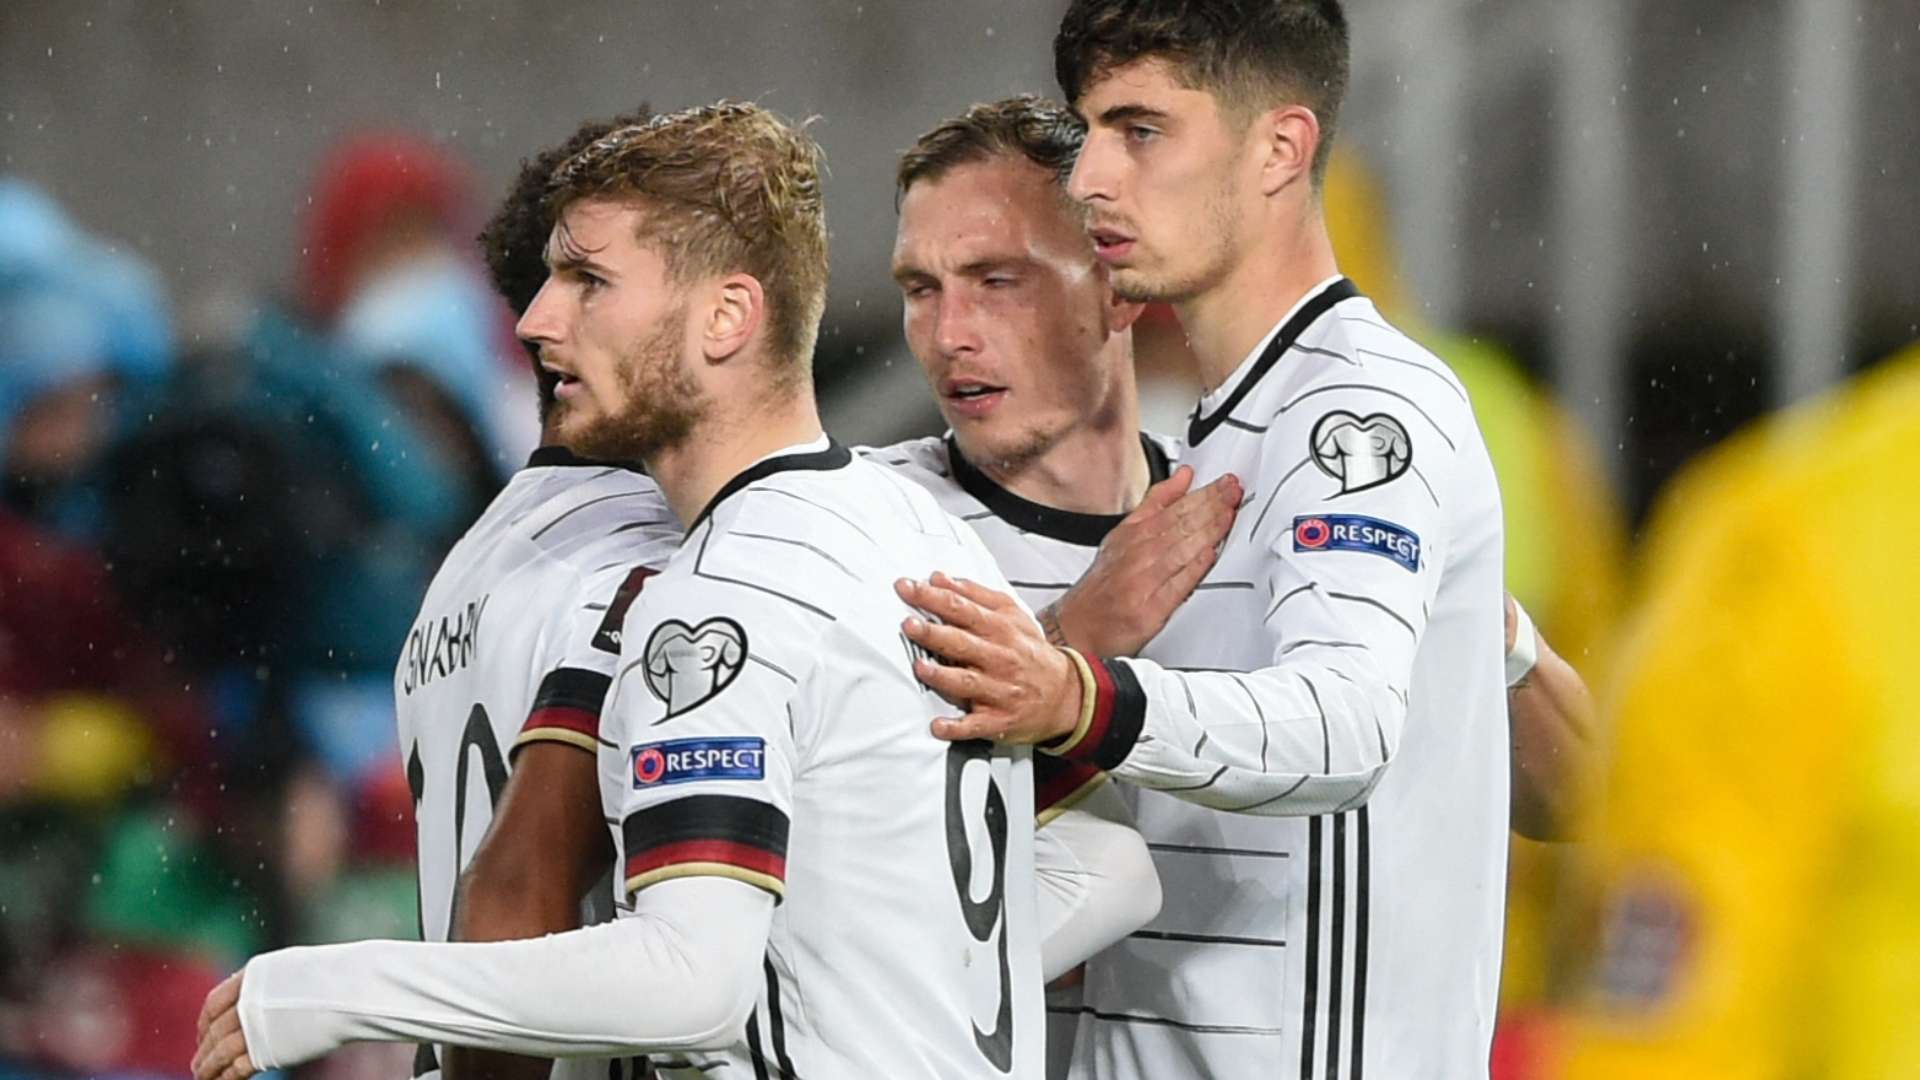 Germany celebrating World Cup qualifers